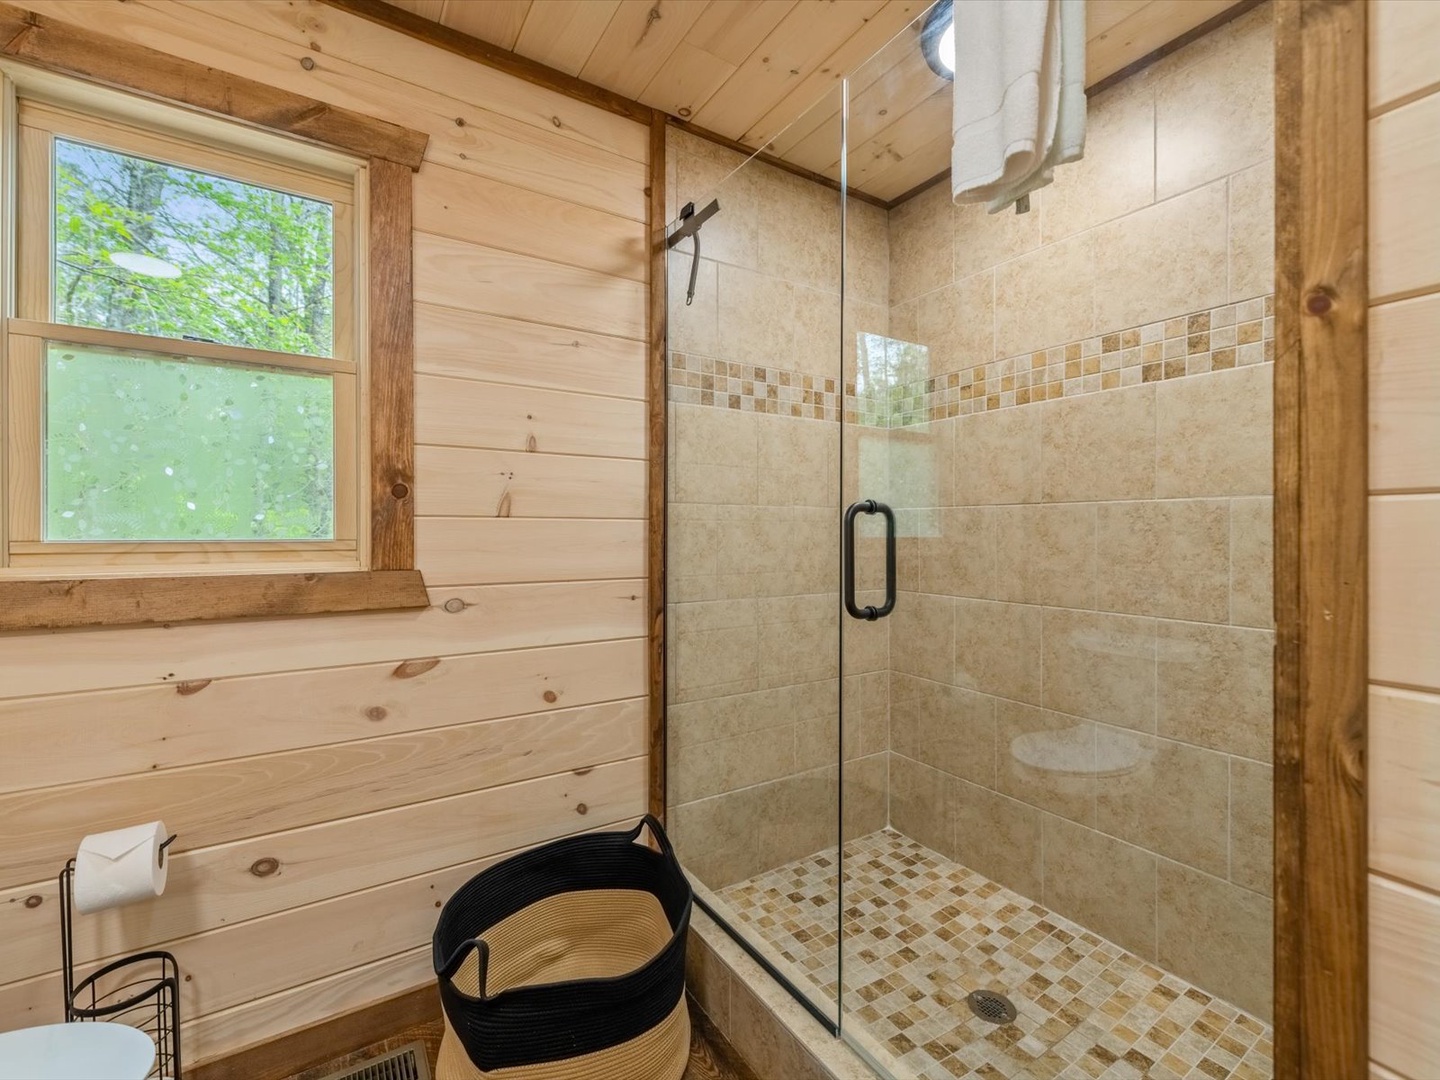 Fern Creek Hollow Lodge - Entry Level King Bedroom's Bathroom